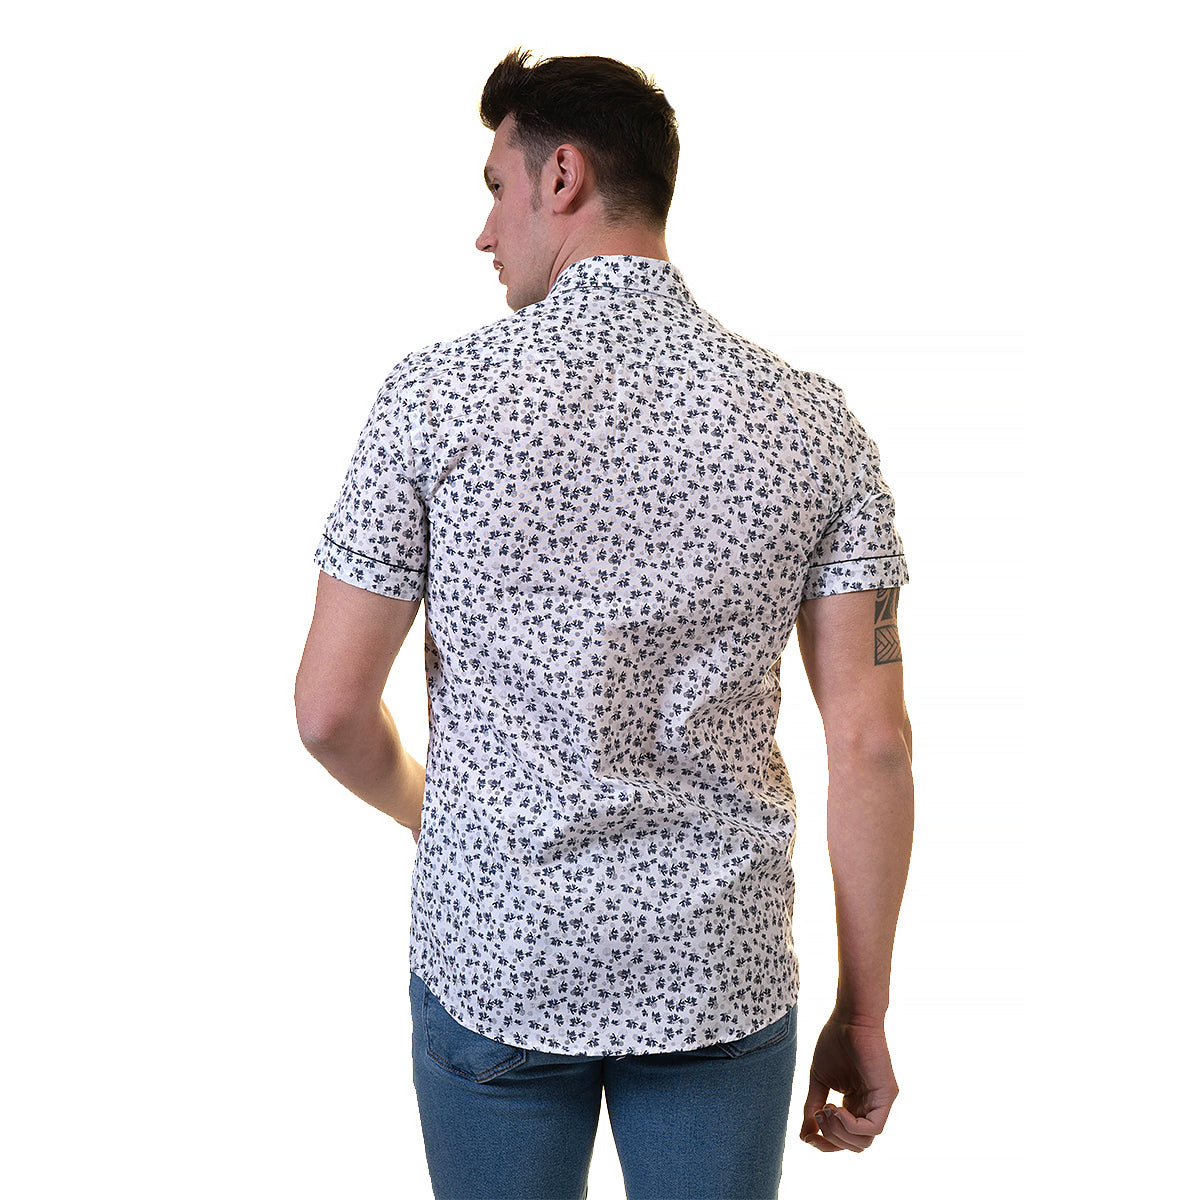 Black Dots Mens Short Sleeve Button up Shirts - Tailored Slim Fit Cotton Dress Shirts